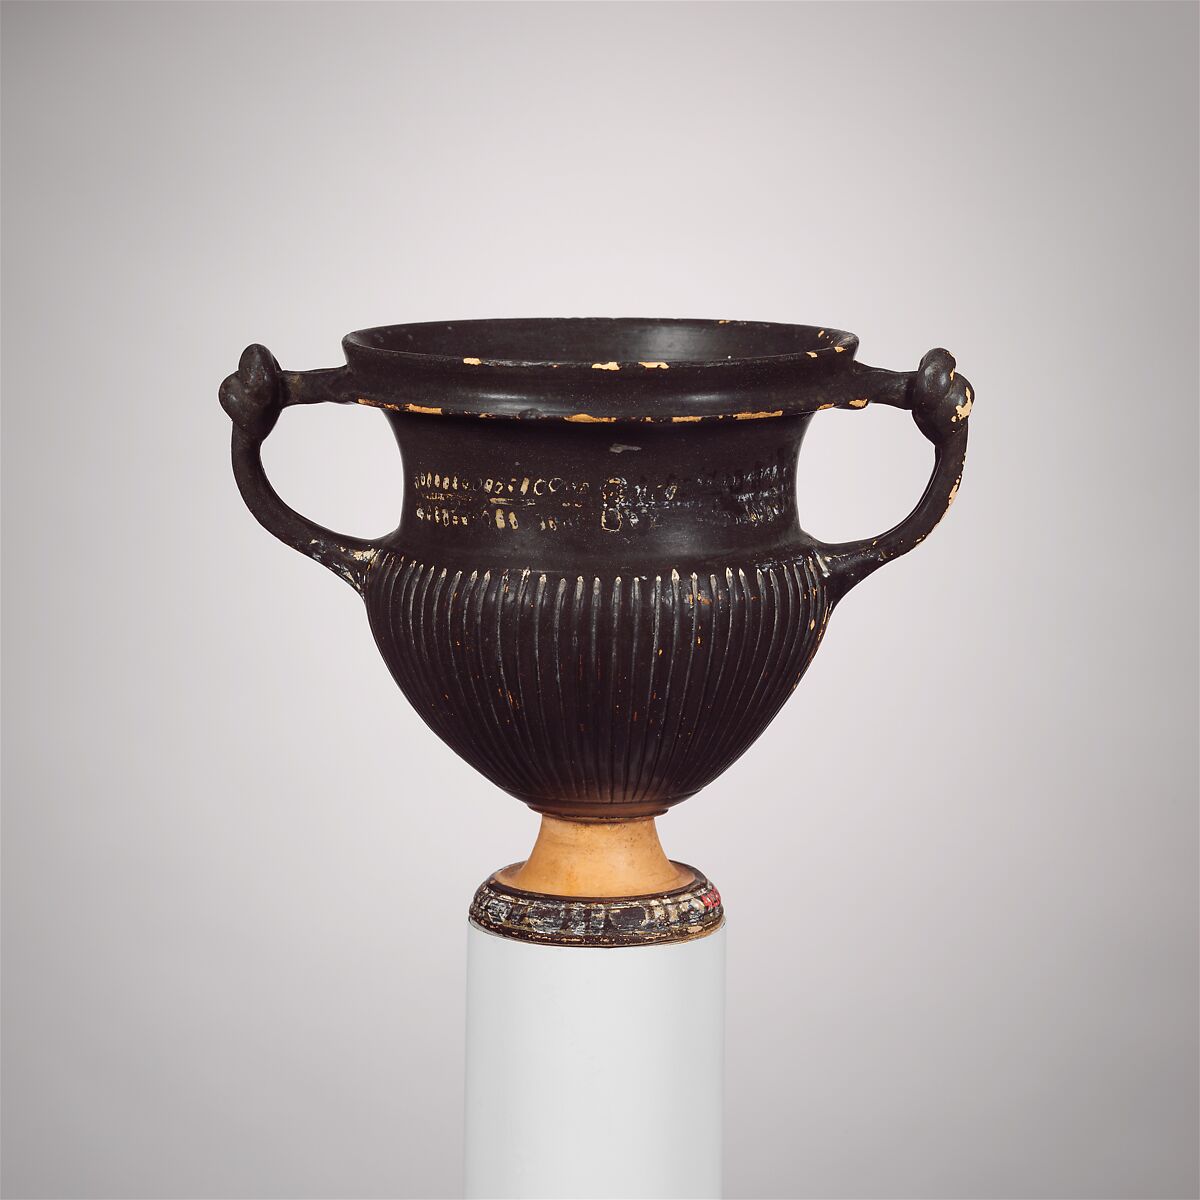 Terracotta kantharos (drinking cup with high handles), Terracotta, Greek, South Italian, Apulian, Gnathian 